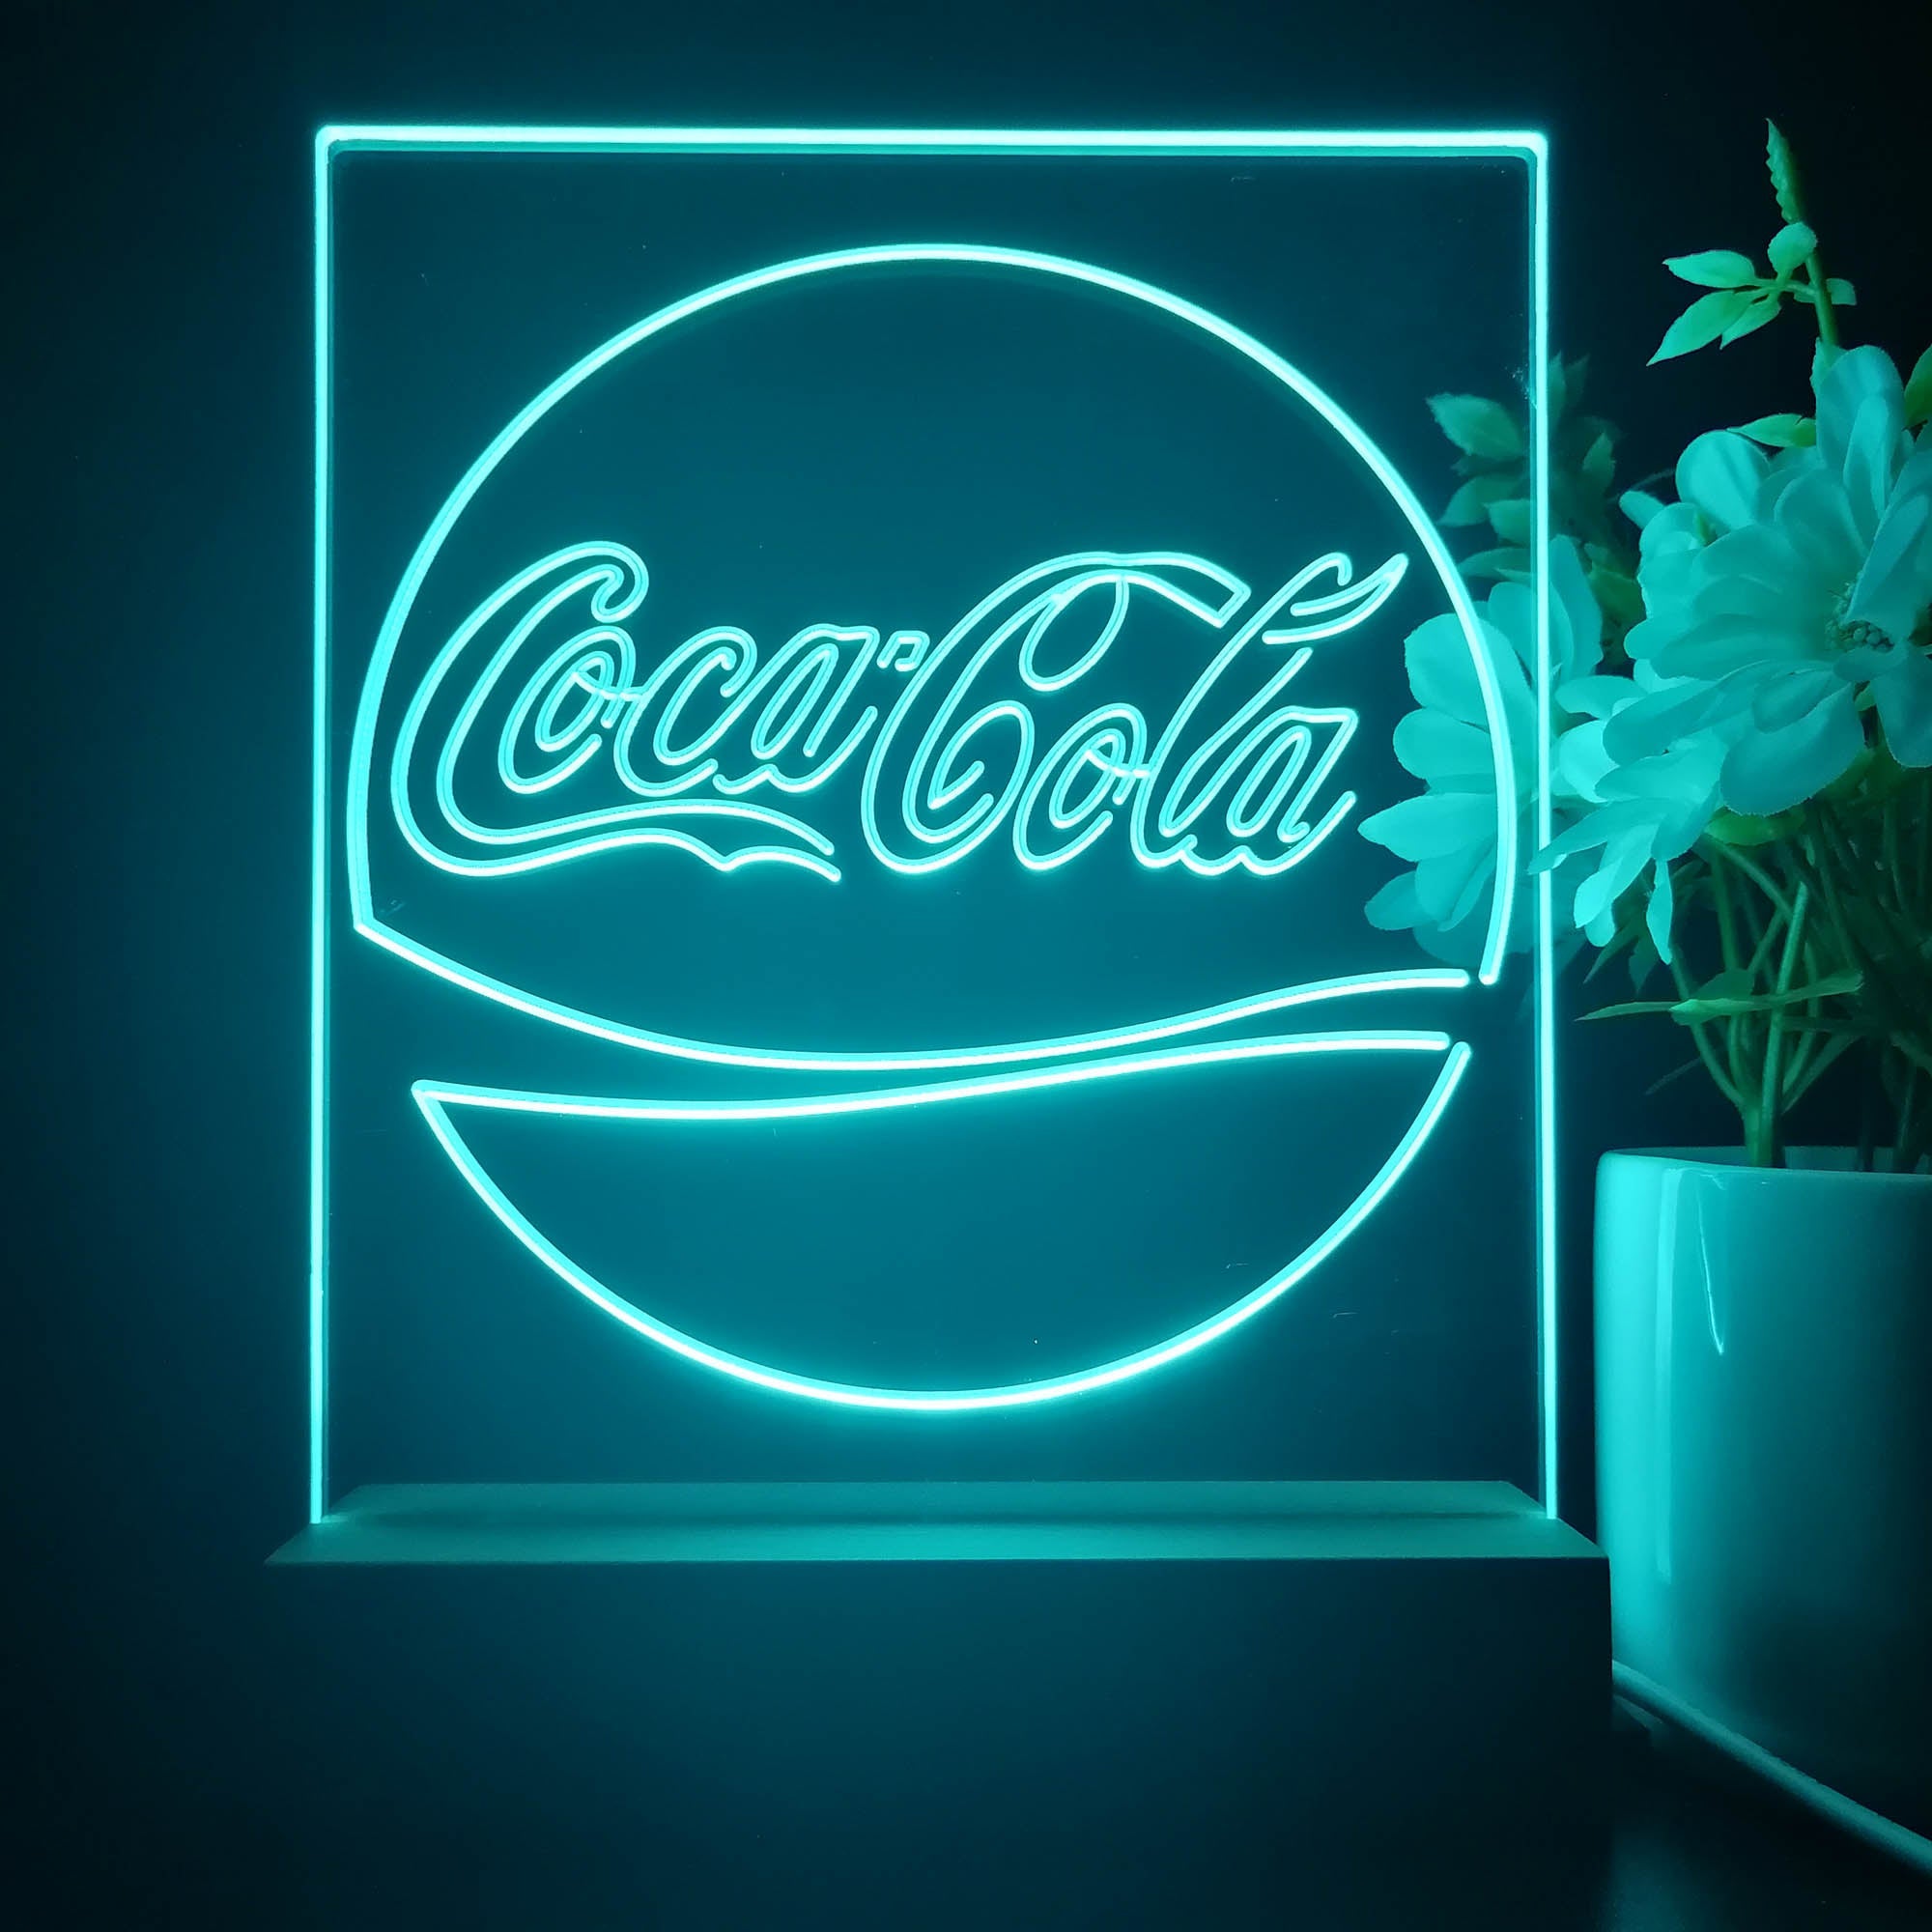 Coca Cola Classic Soft Drink 3D Illusion Night Light Desk Lamp